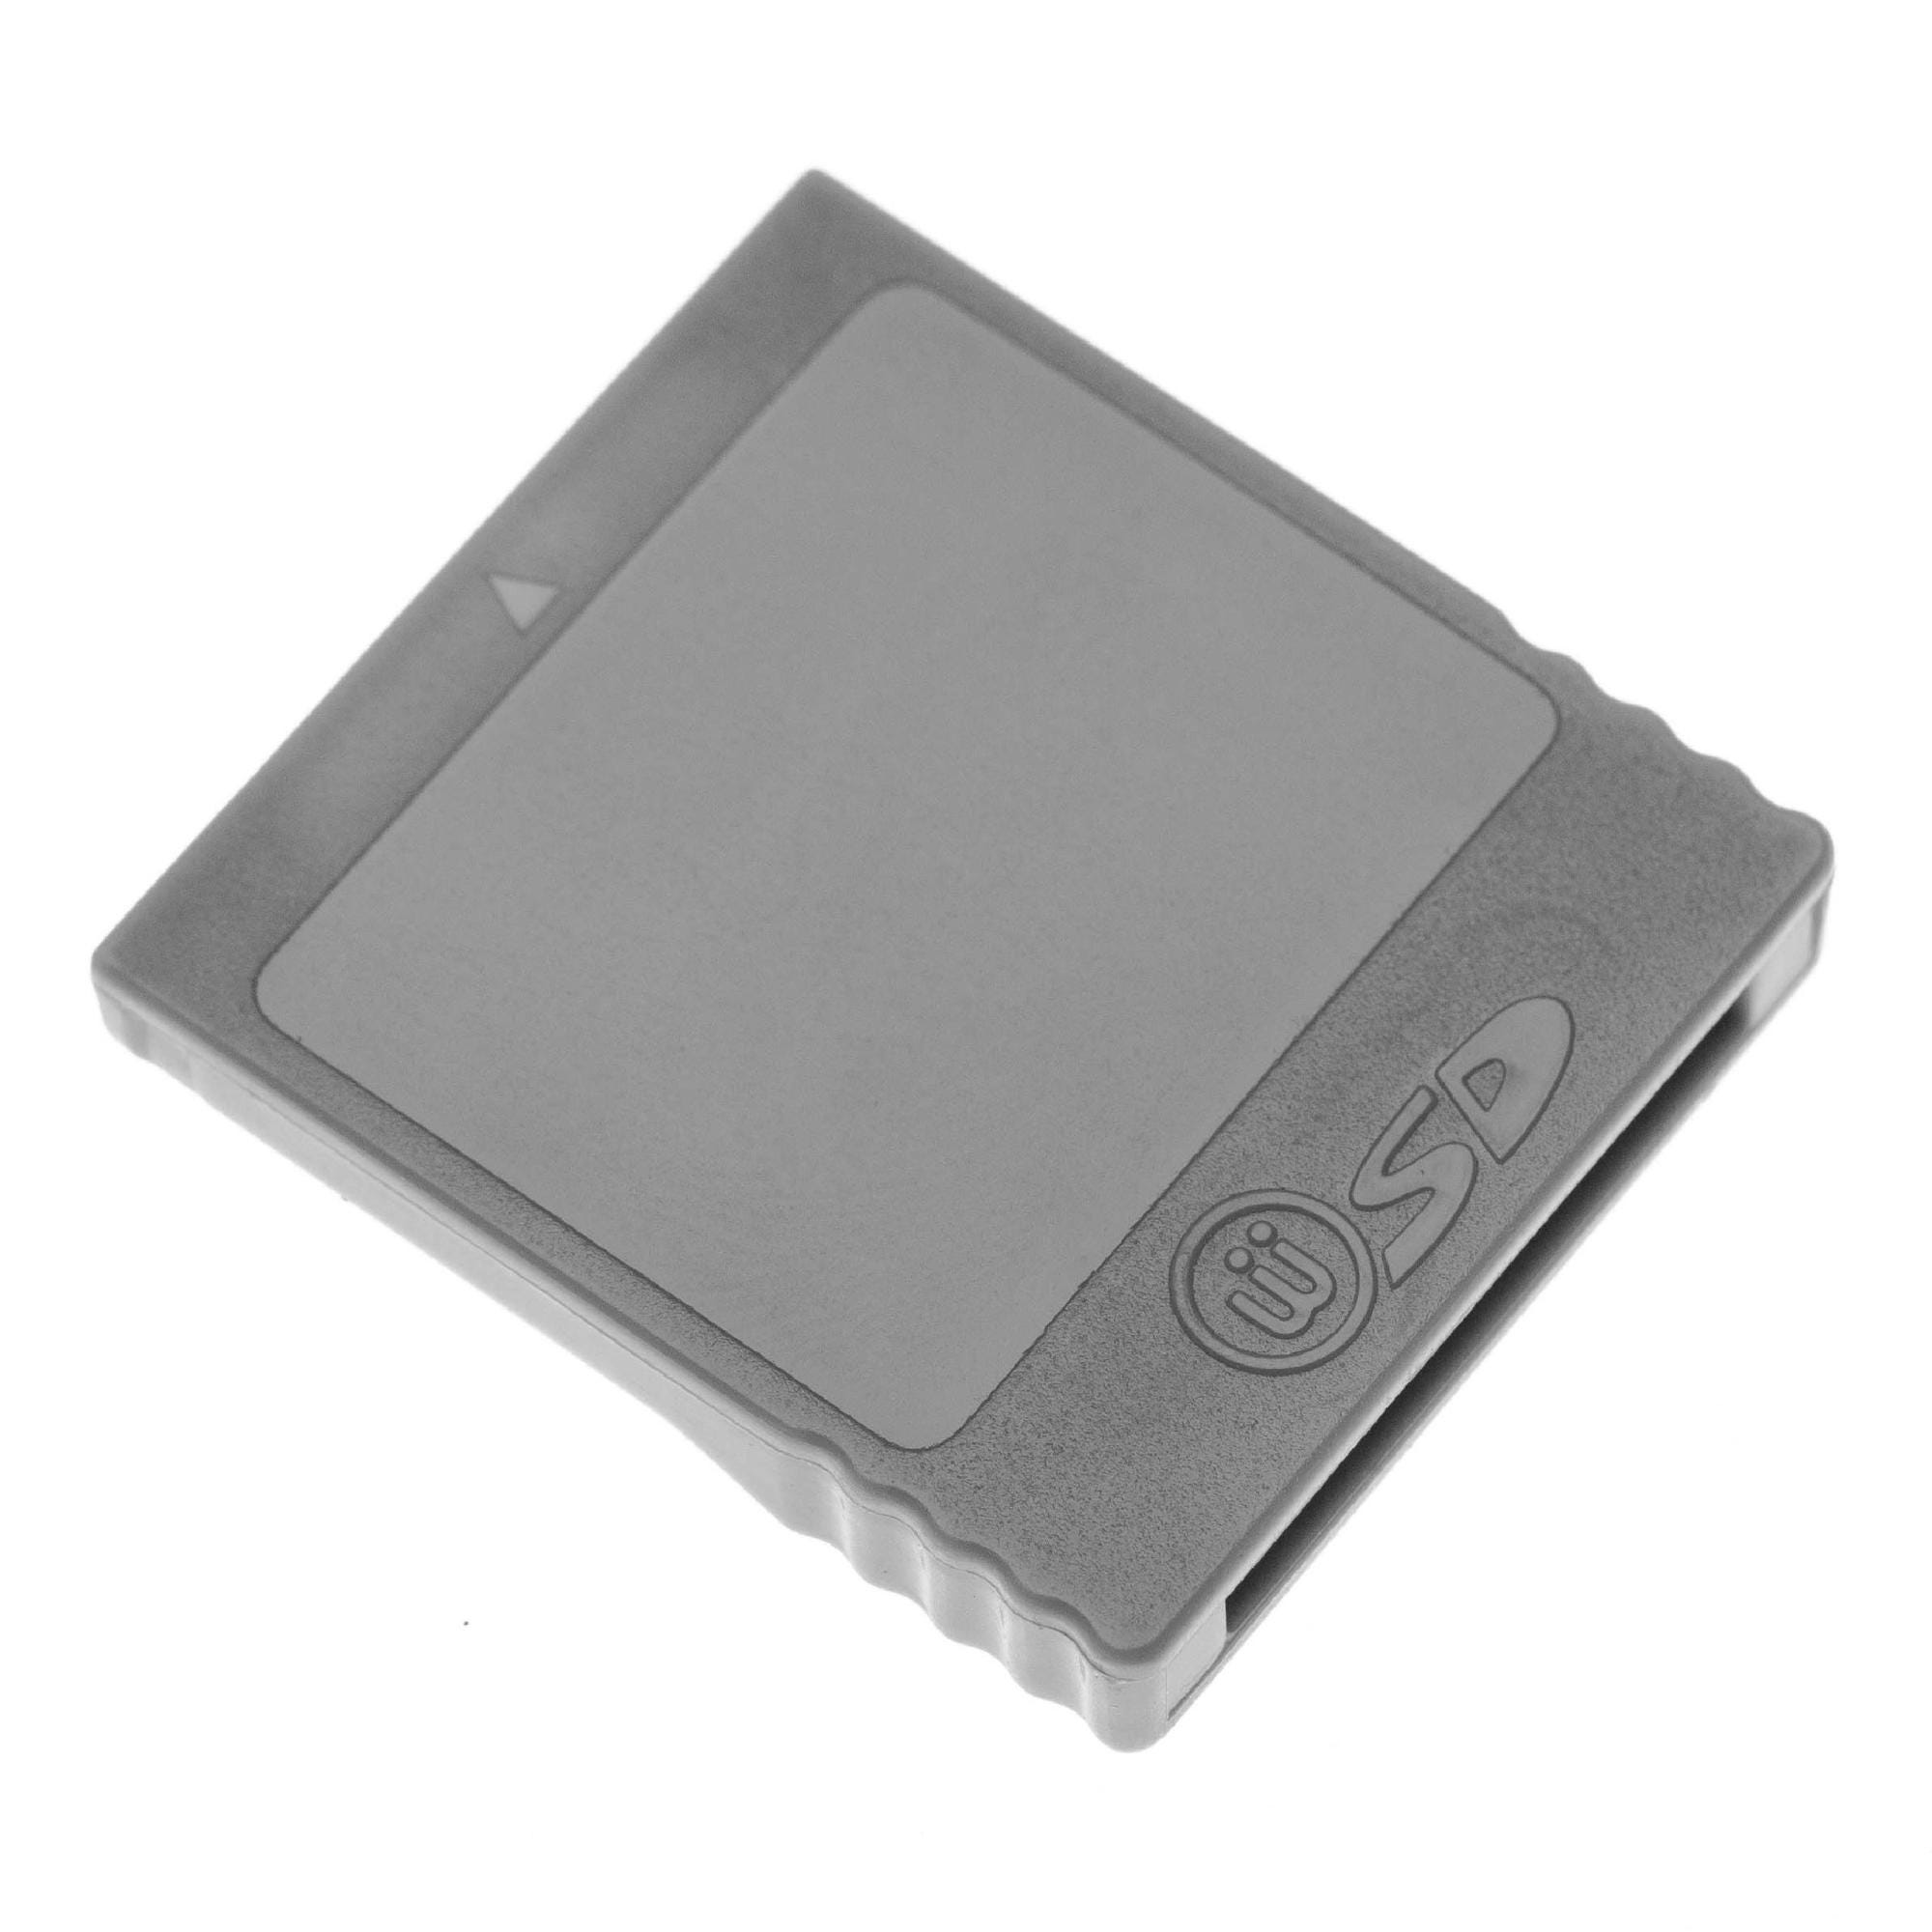 Vhbw Adaptateur de carte SD compatible avec Nintendo GameCube, Wii